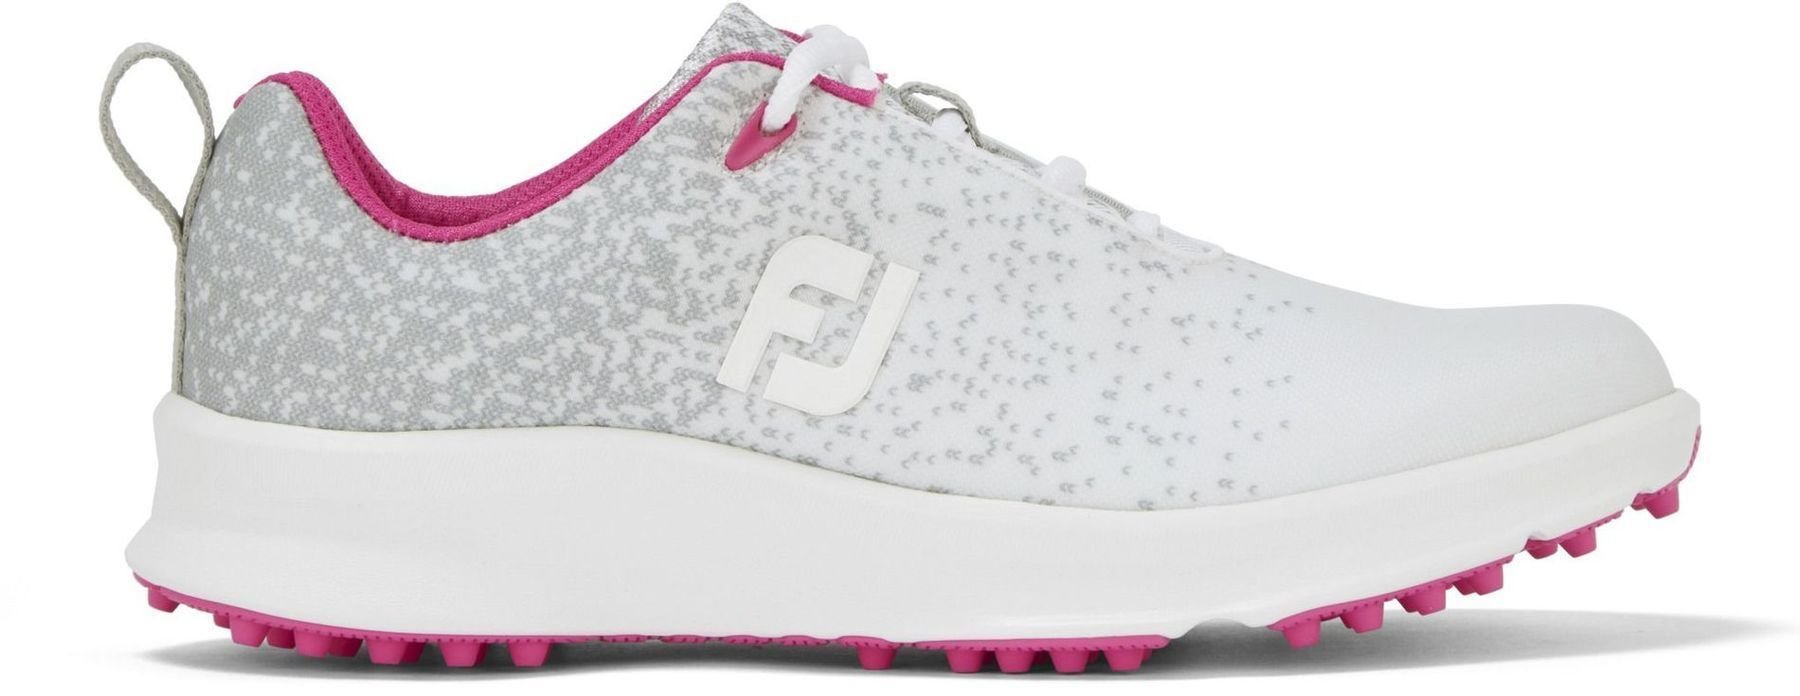 Chaussures de golf pour femmes Footjoy Leisure Silver/White/Fuchsia 39